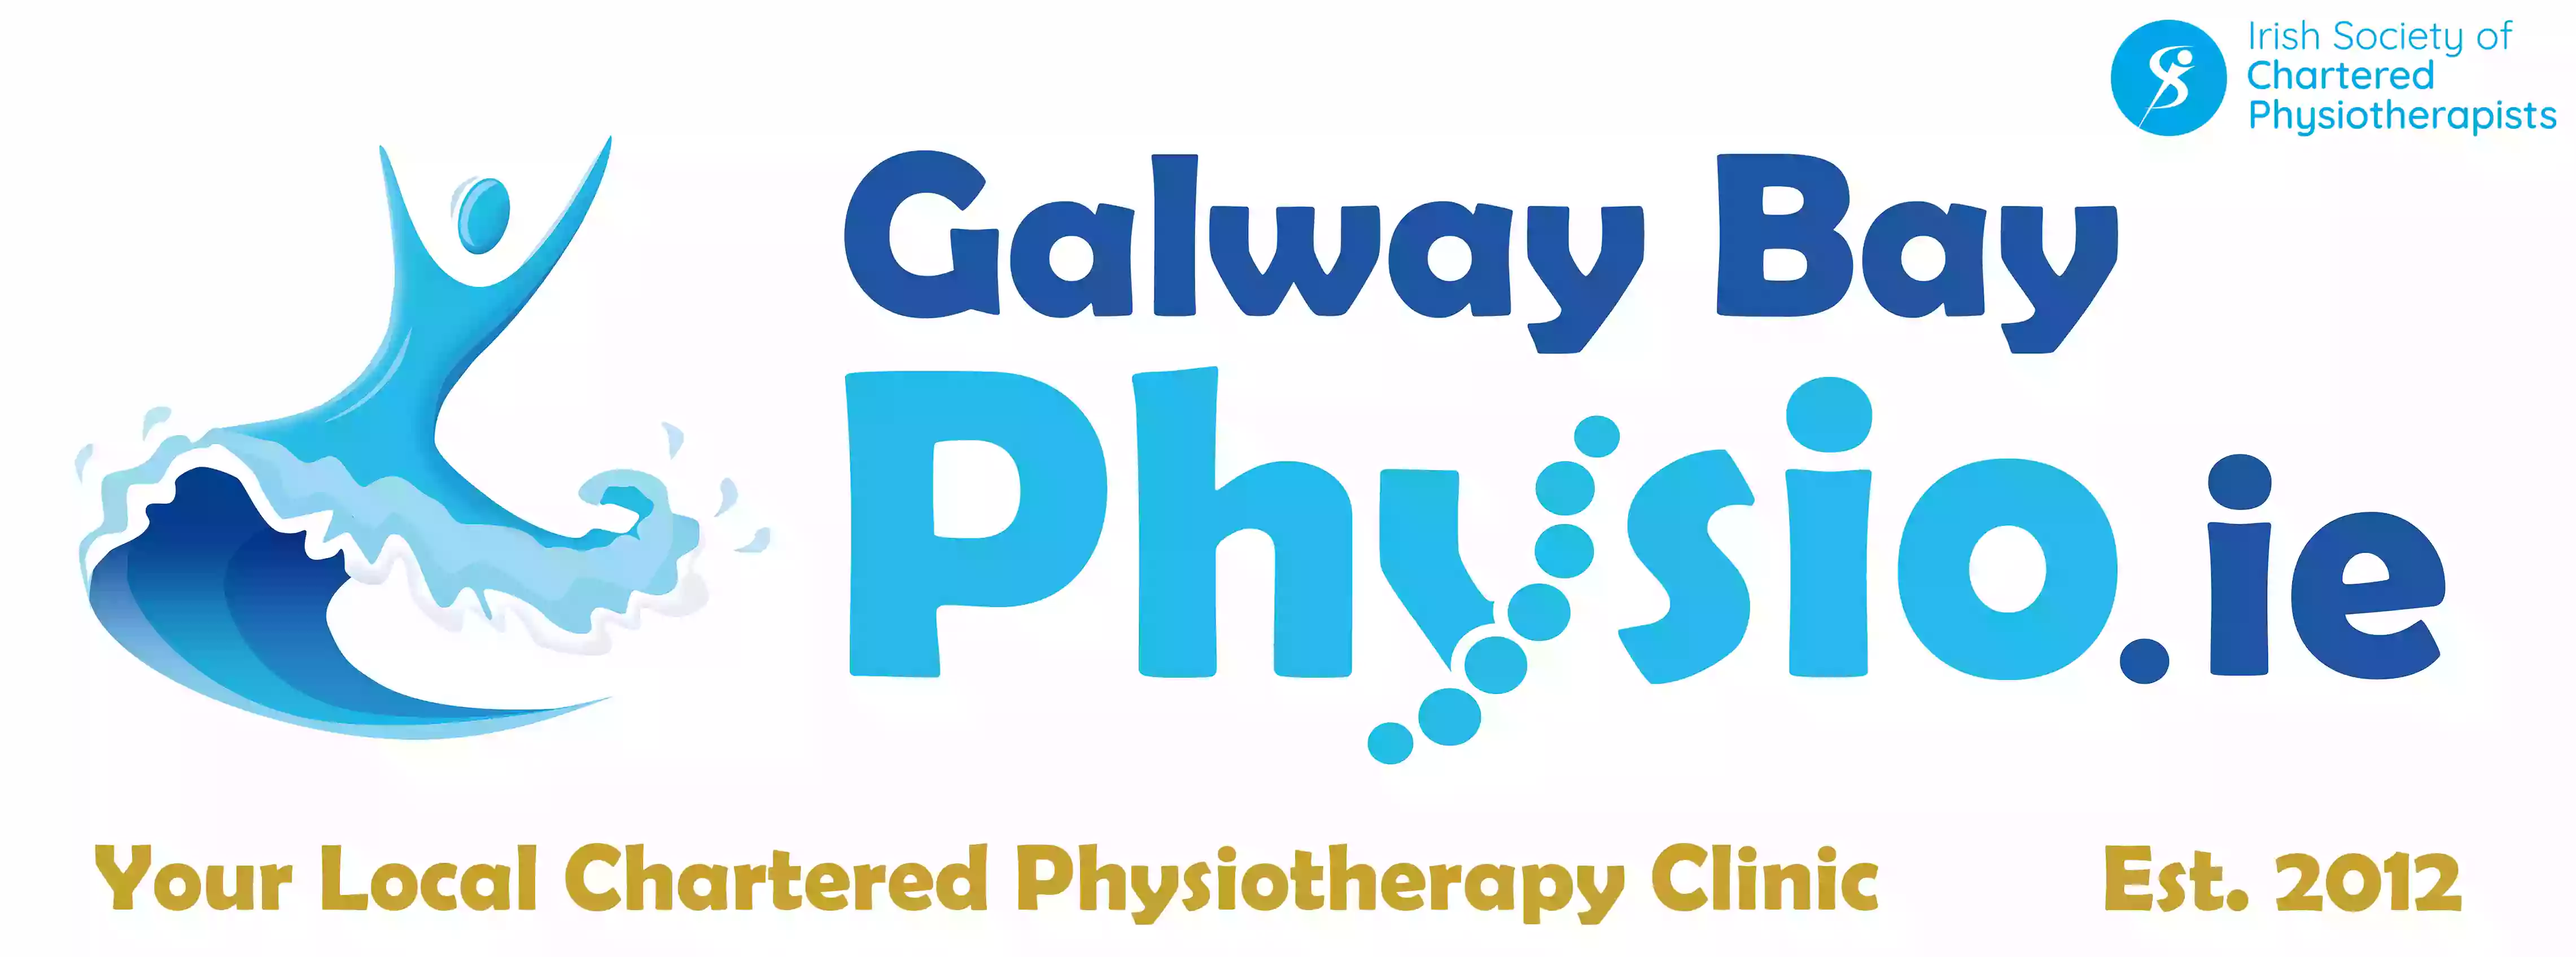 Galway Bay Physio